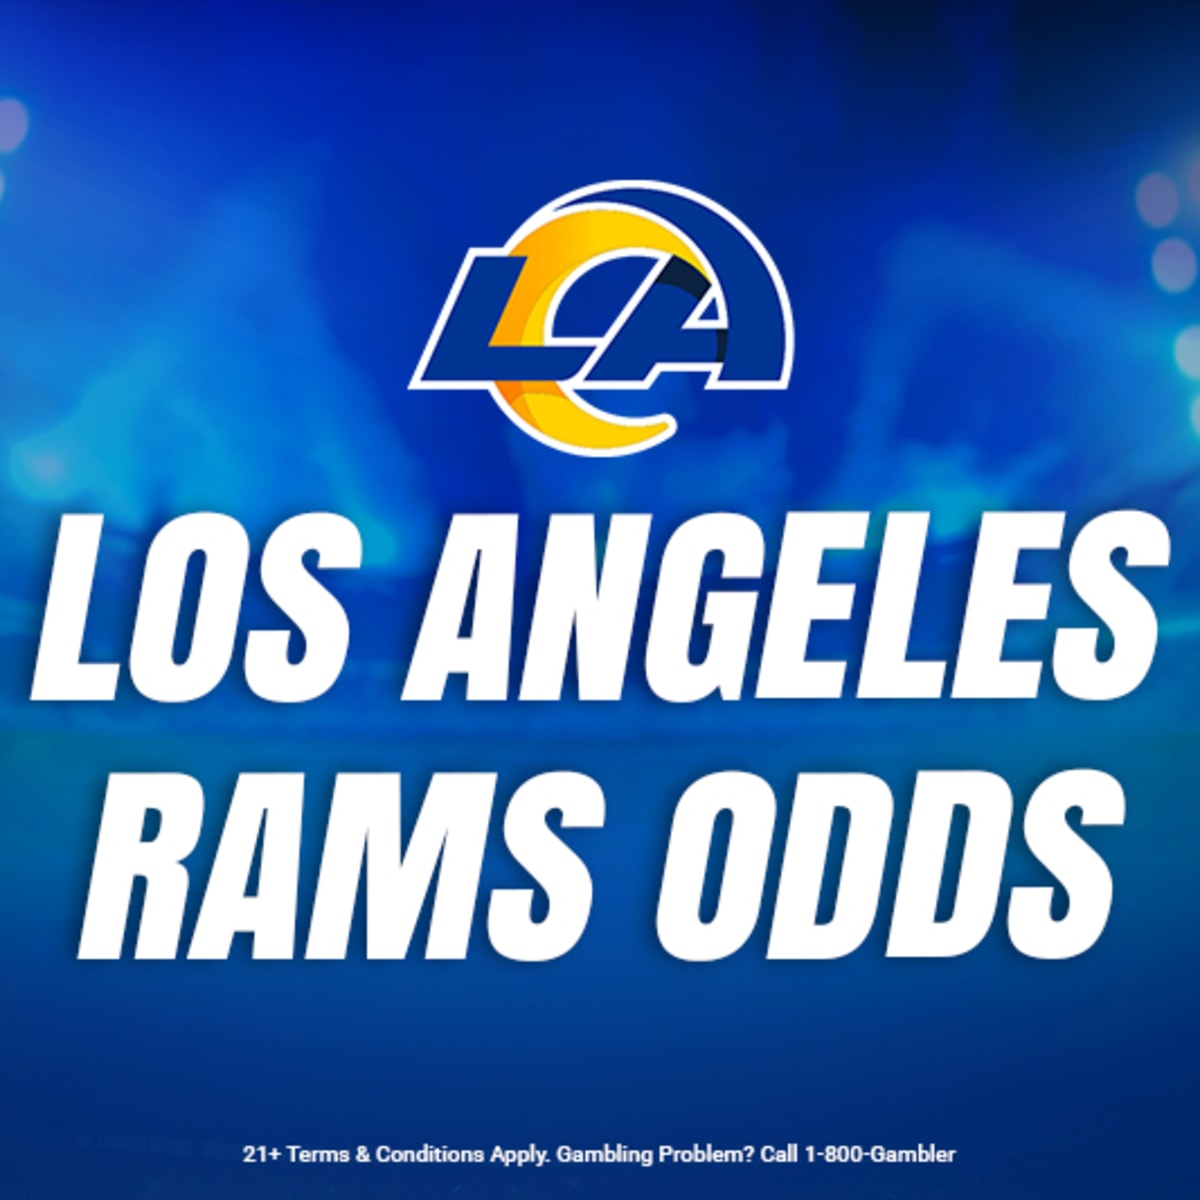 49ers-Rams odds: Opening odds, spread, moneyline, over/under for